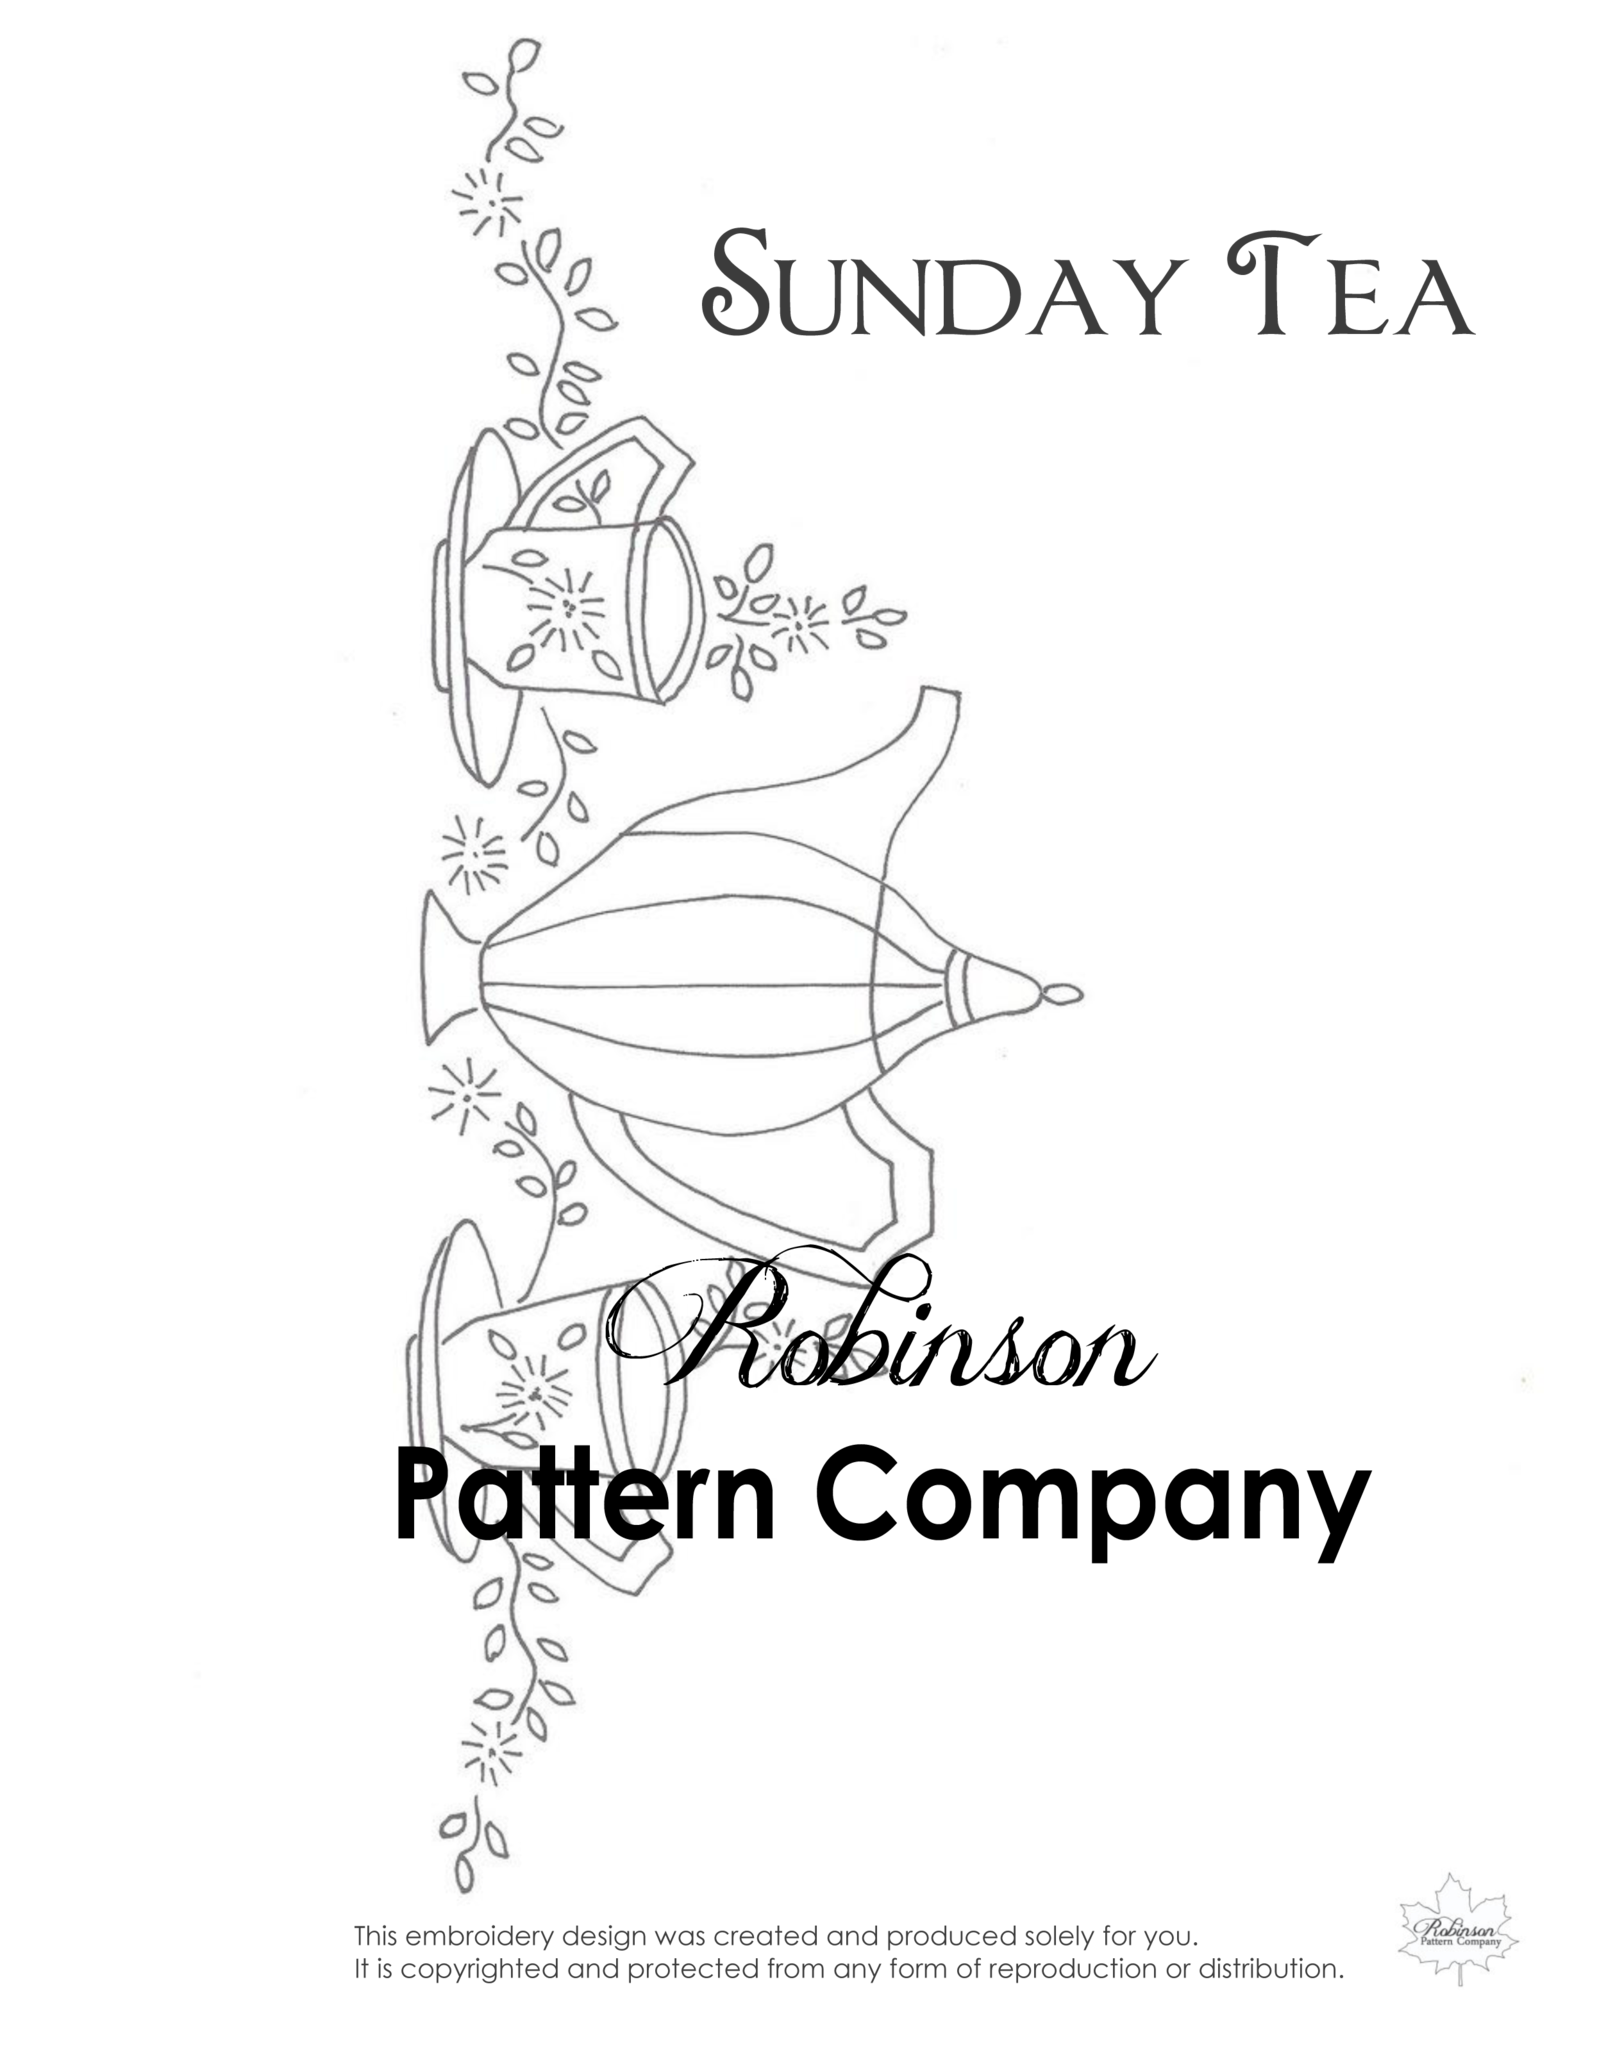 Sunday Tea Hand Embroidery pattern